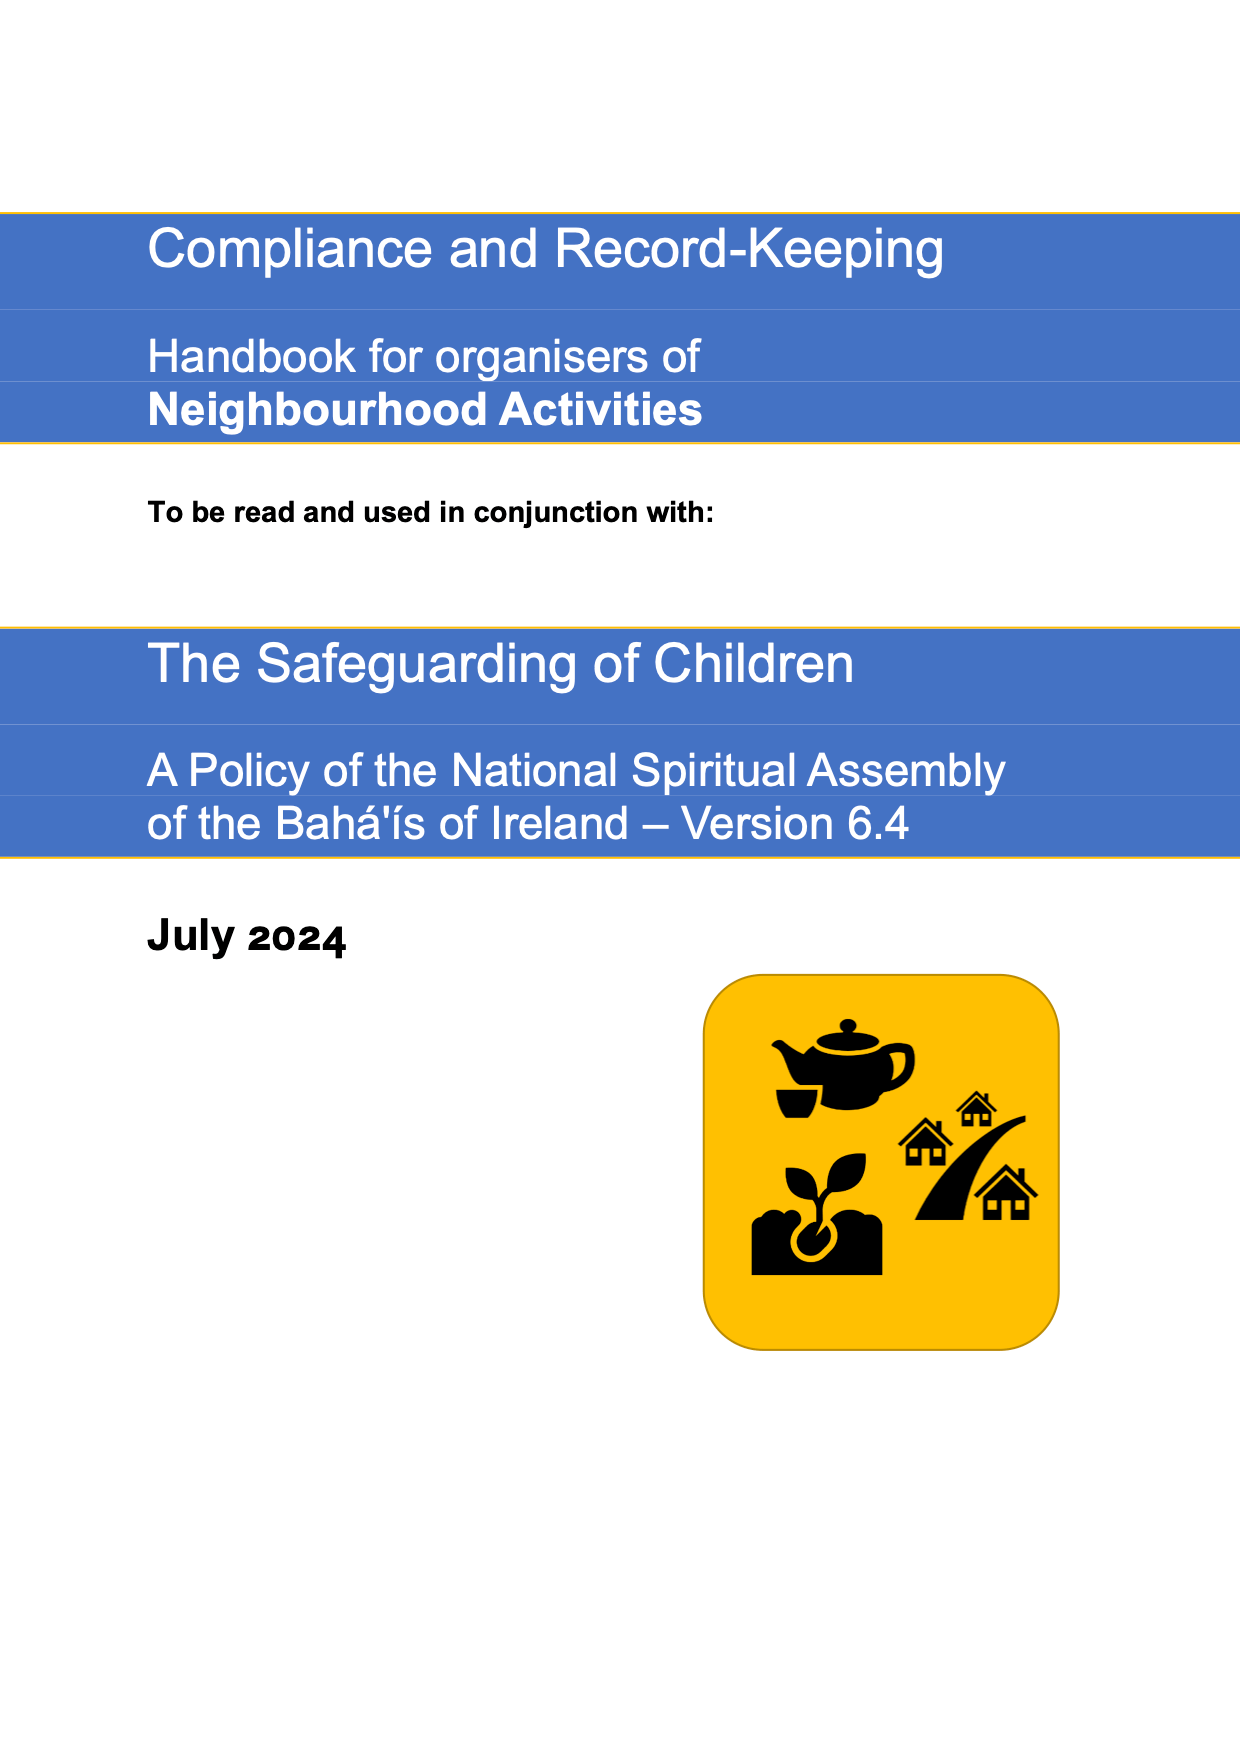 Compliance and Record-Keeping Handbook for Neighbourhood Activities 2024 V6_4